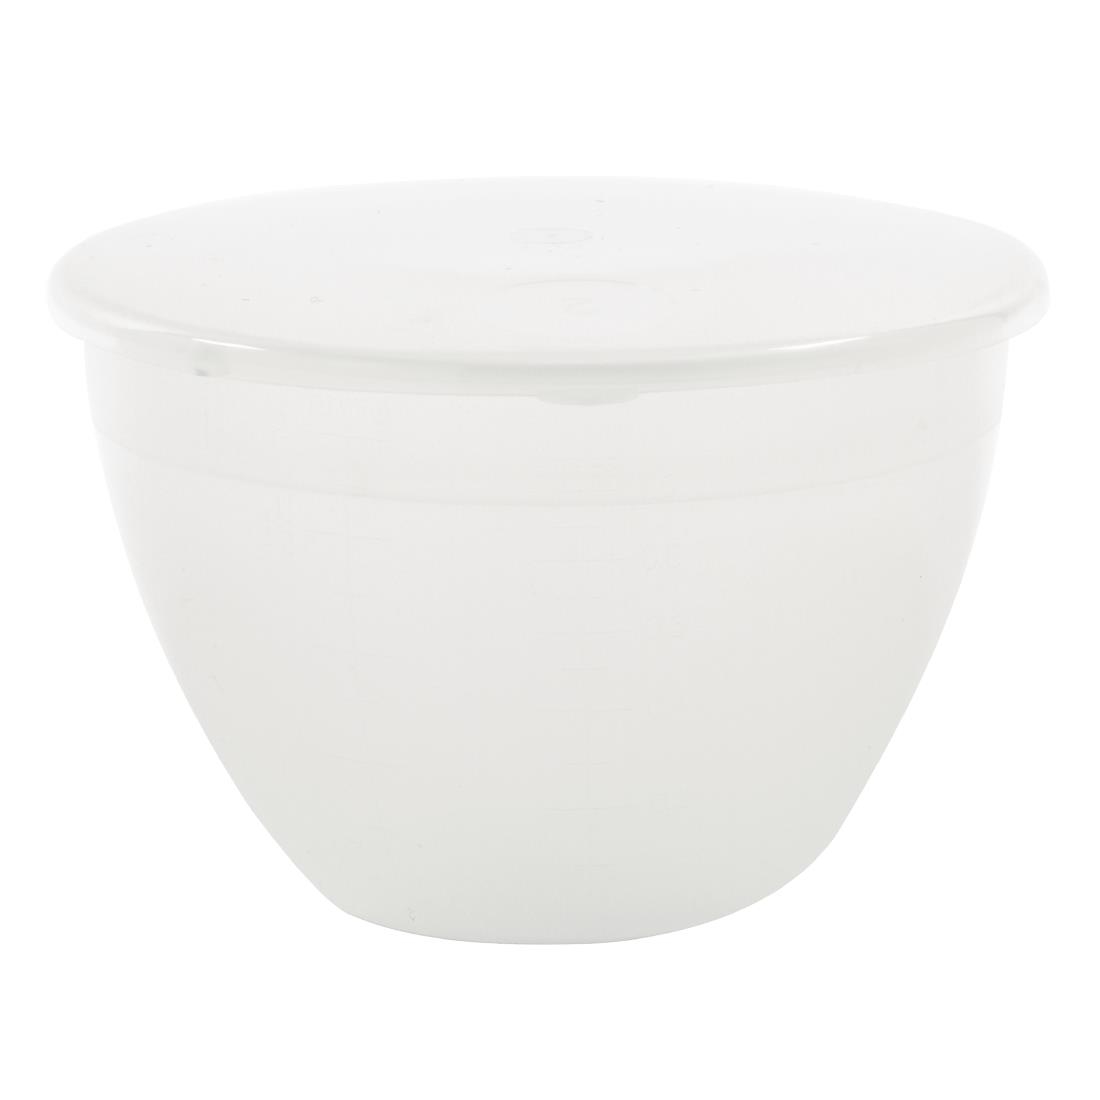 Kitchen Craft Polypropylene Pudding Basins 500ml (Pack of 12)